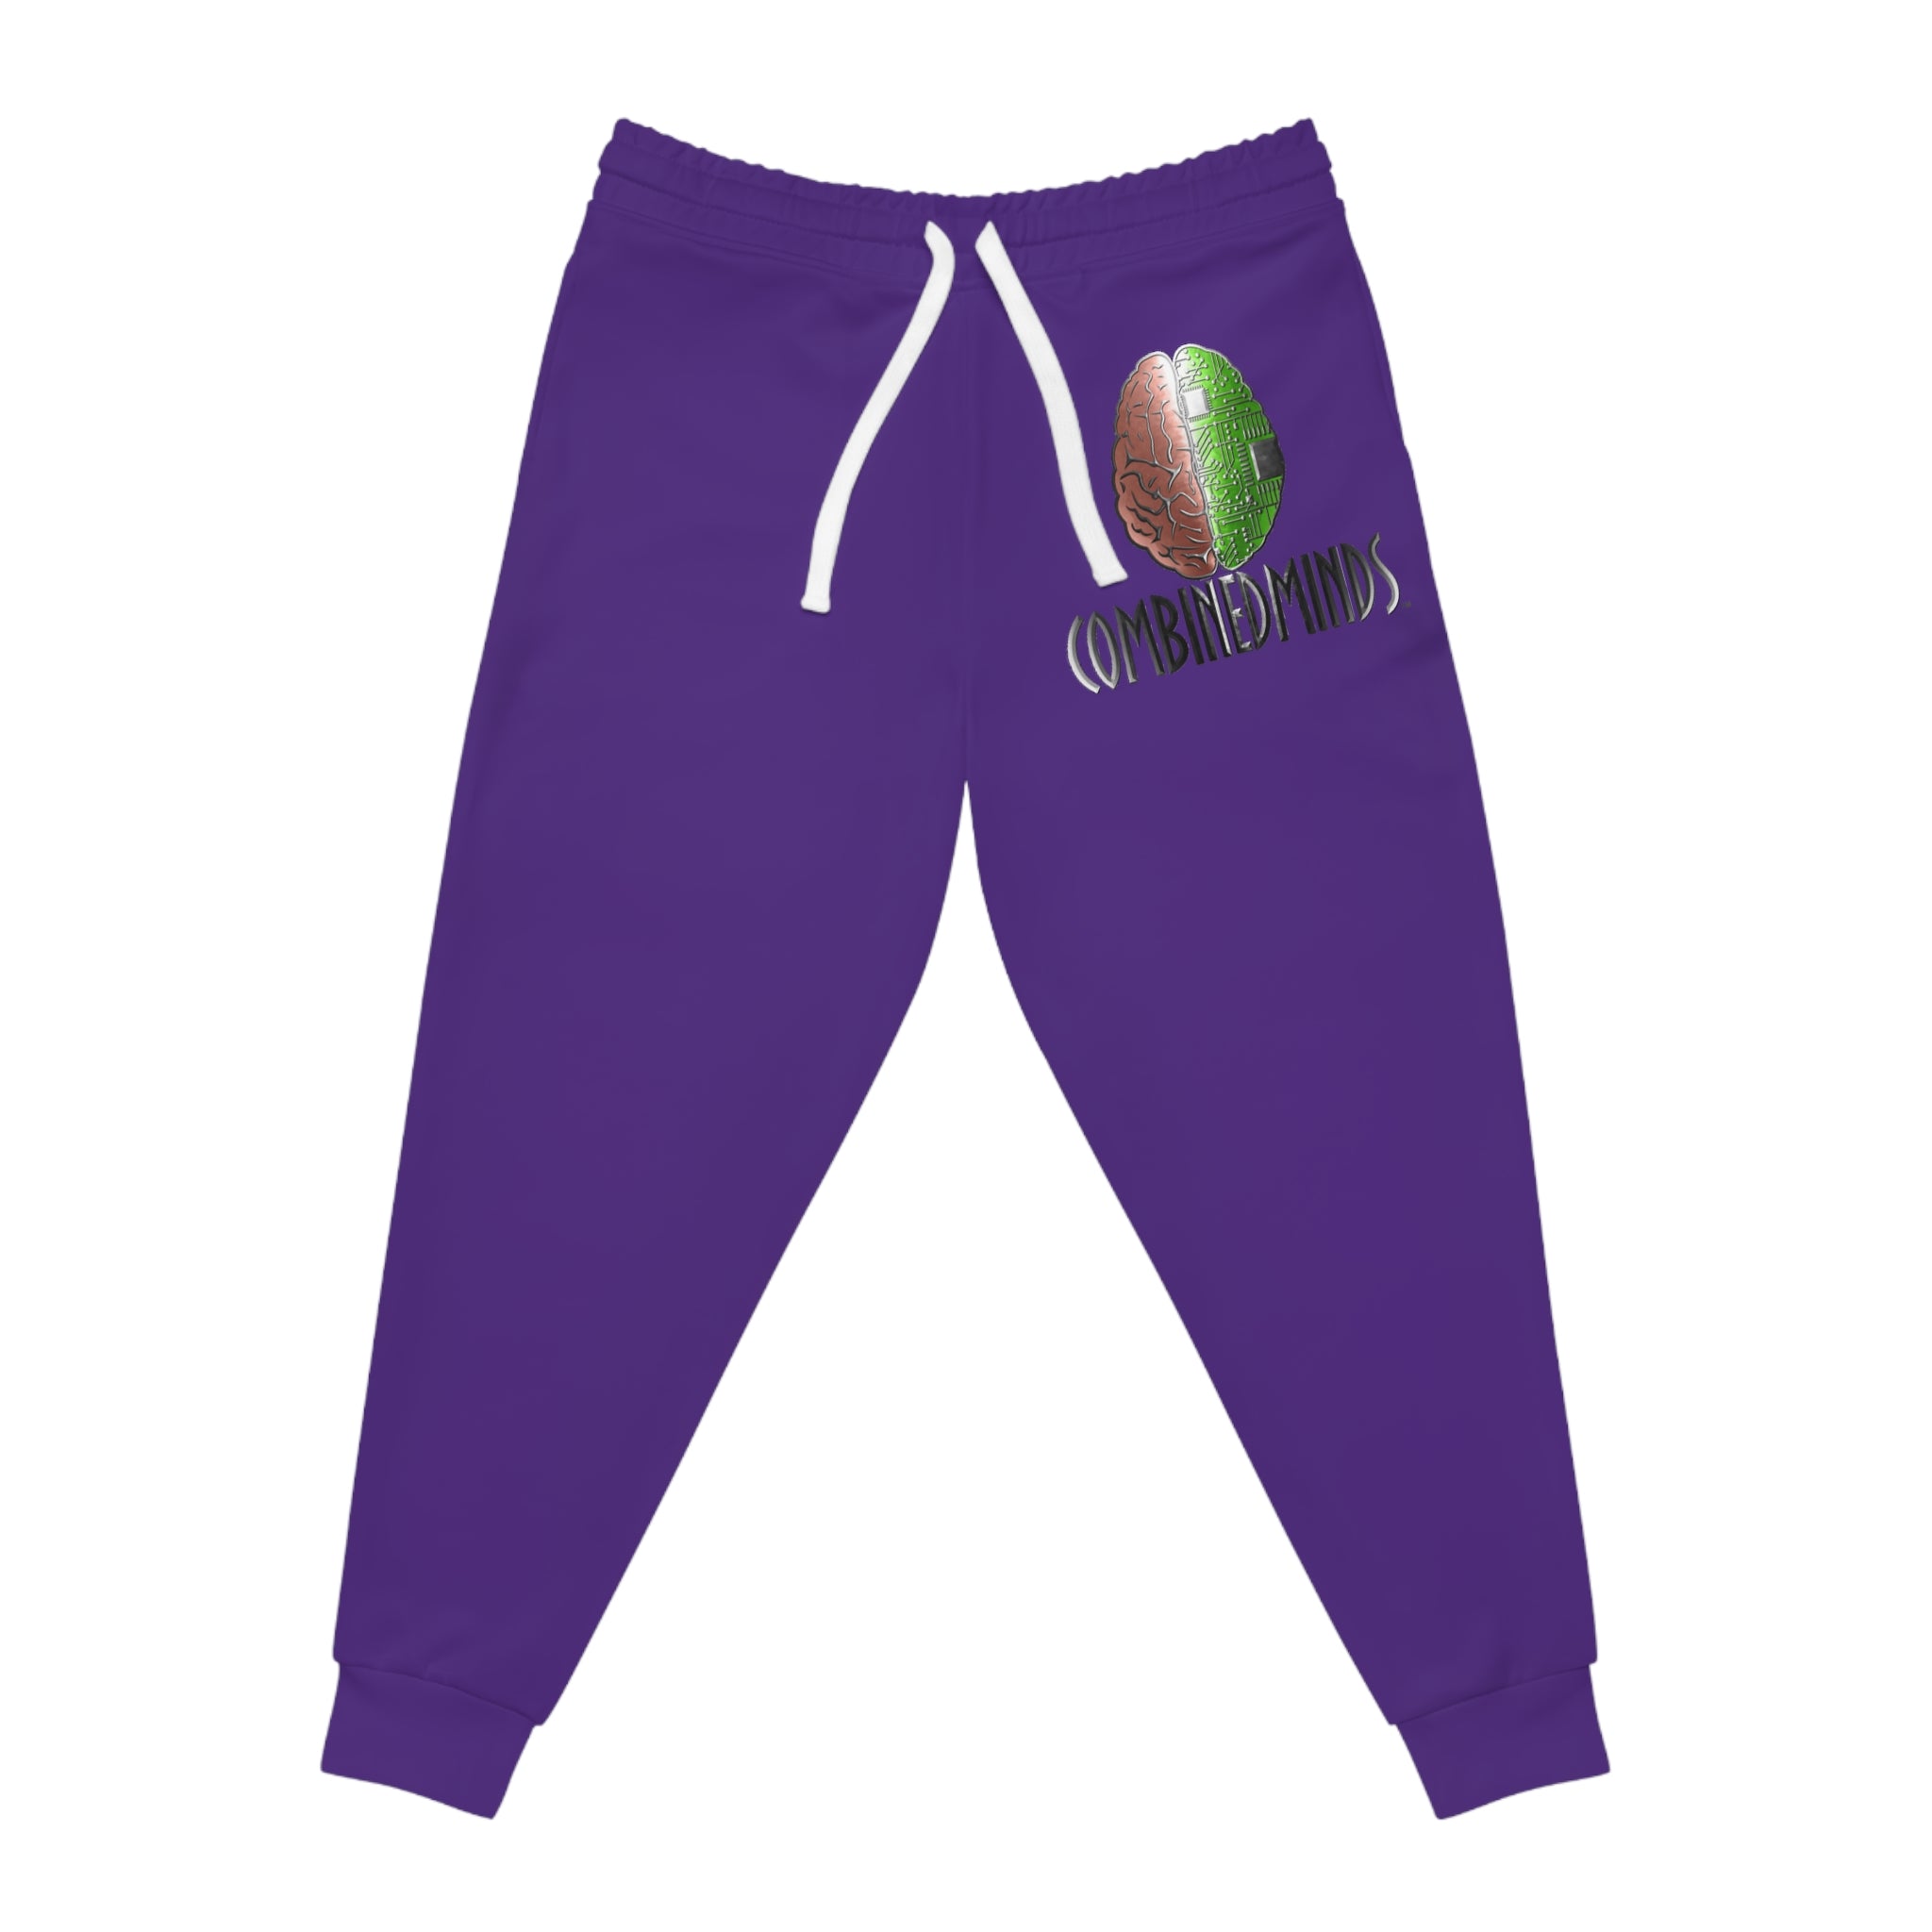 CombinedMinds Athletic Joggers Purple/Color Logo